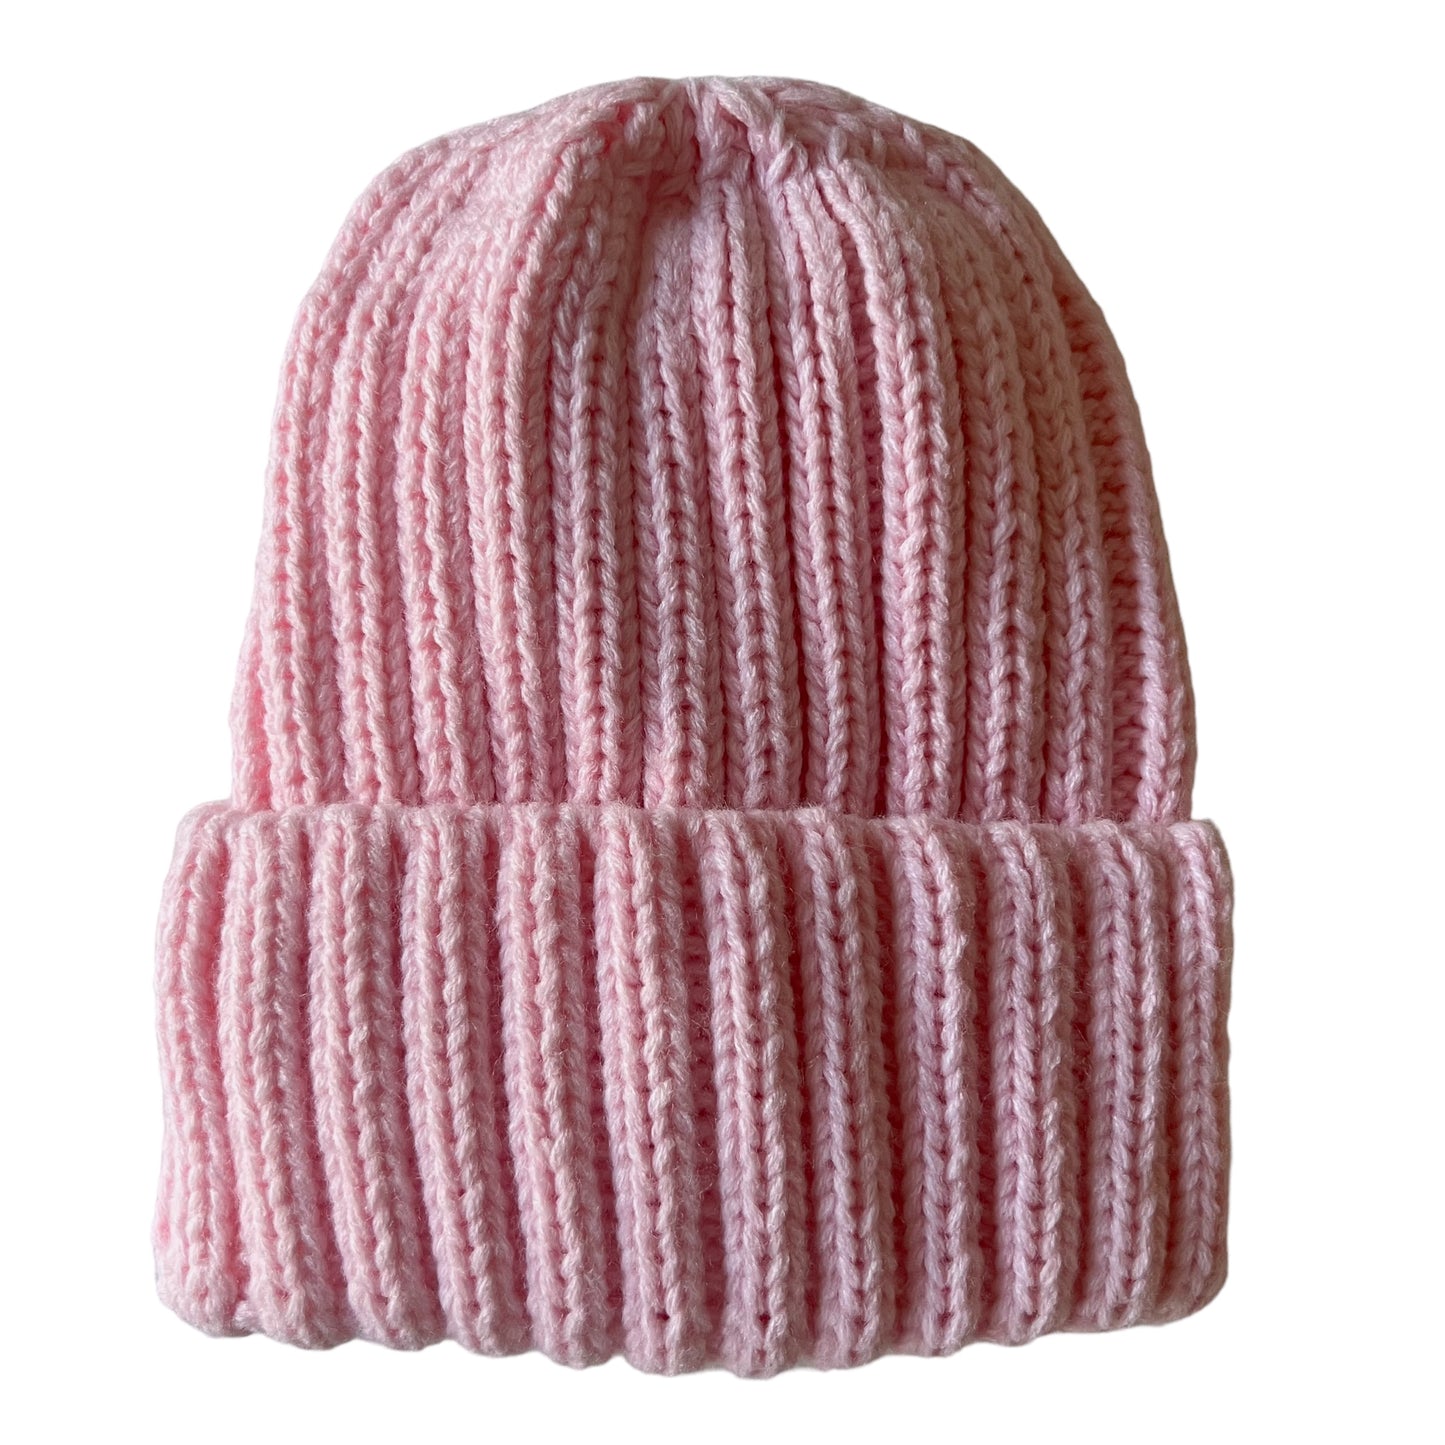 Chunky Knit Hat, Pink Sugar